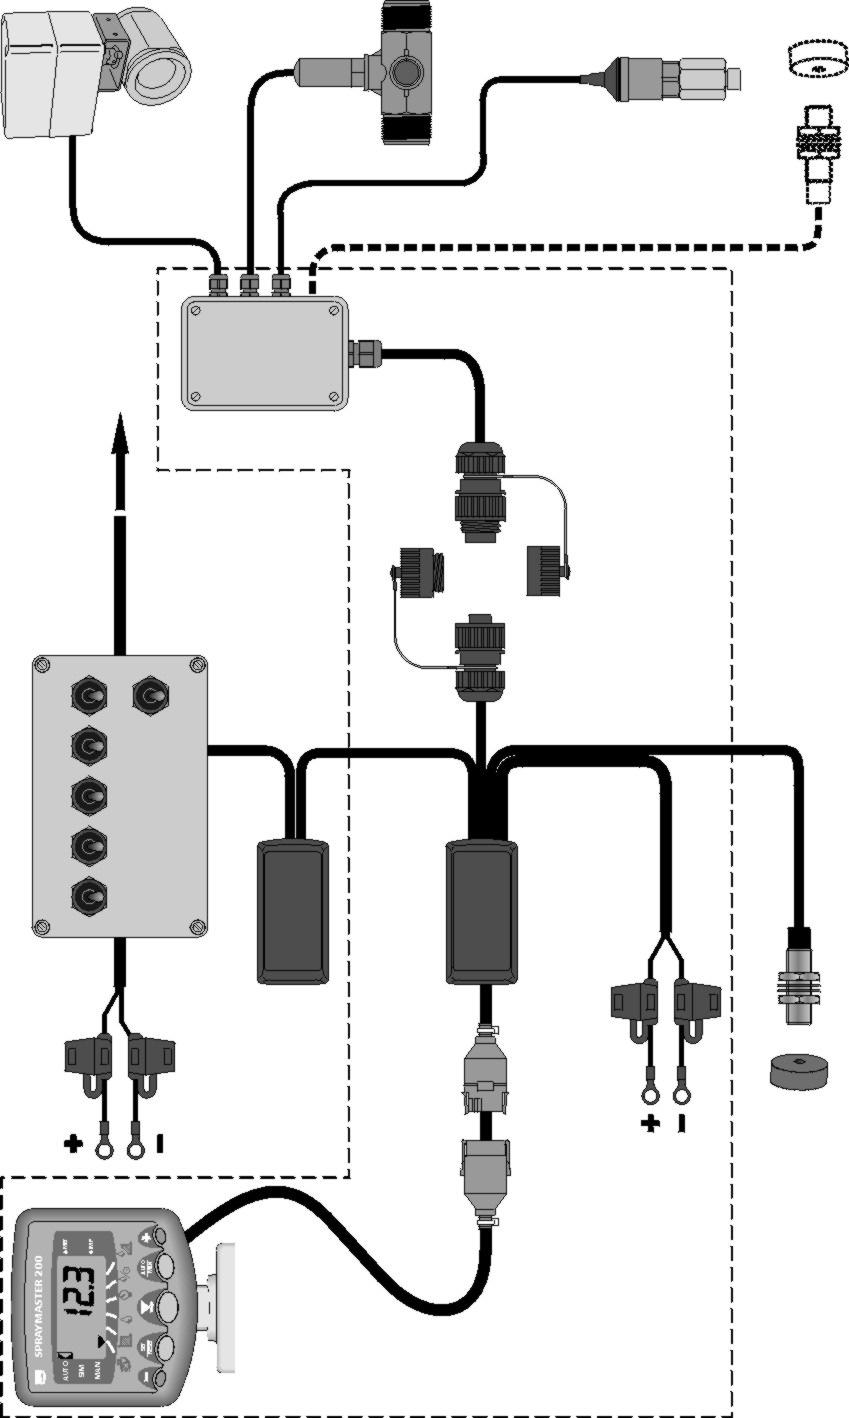 1.2 System Components Figure 1 Flow Sensor Pressure Sensor (4-20mA) Pressure Control Valve 7-way Connector Kit Speed Sensor (alternative installation To